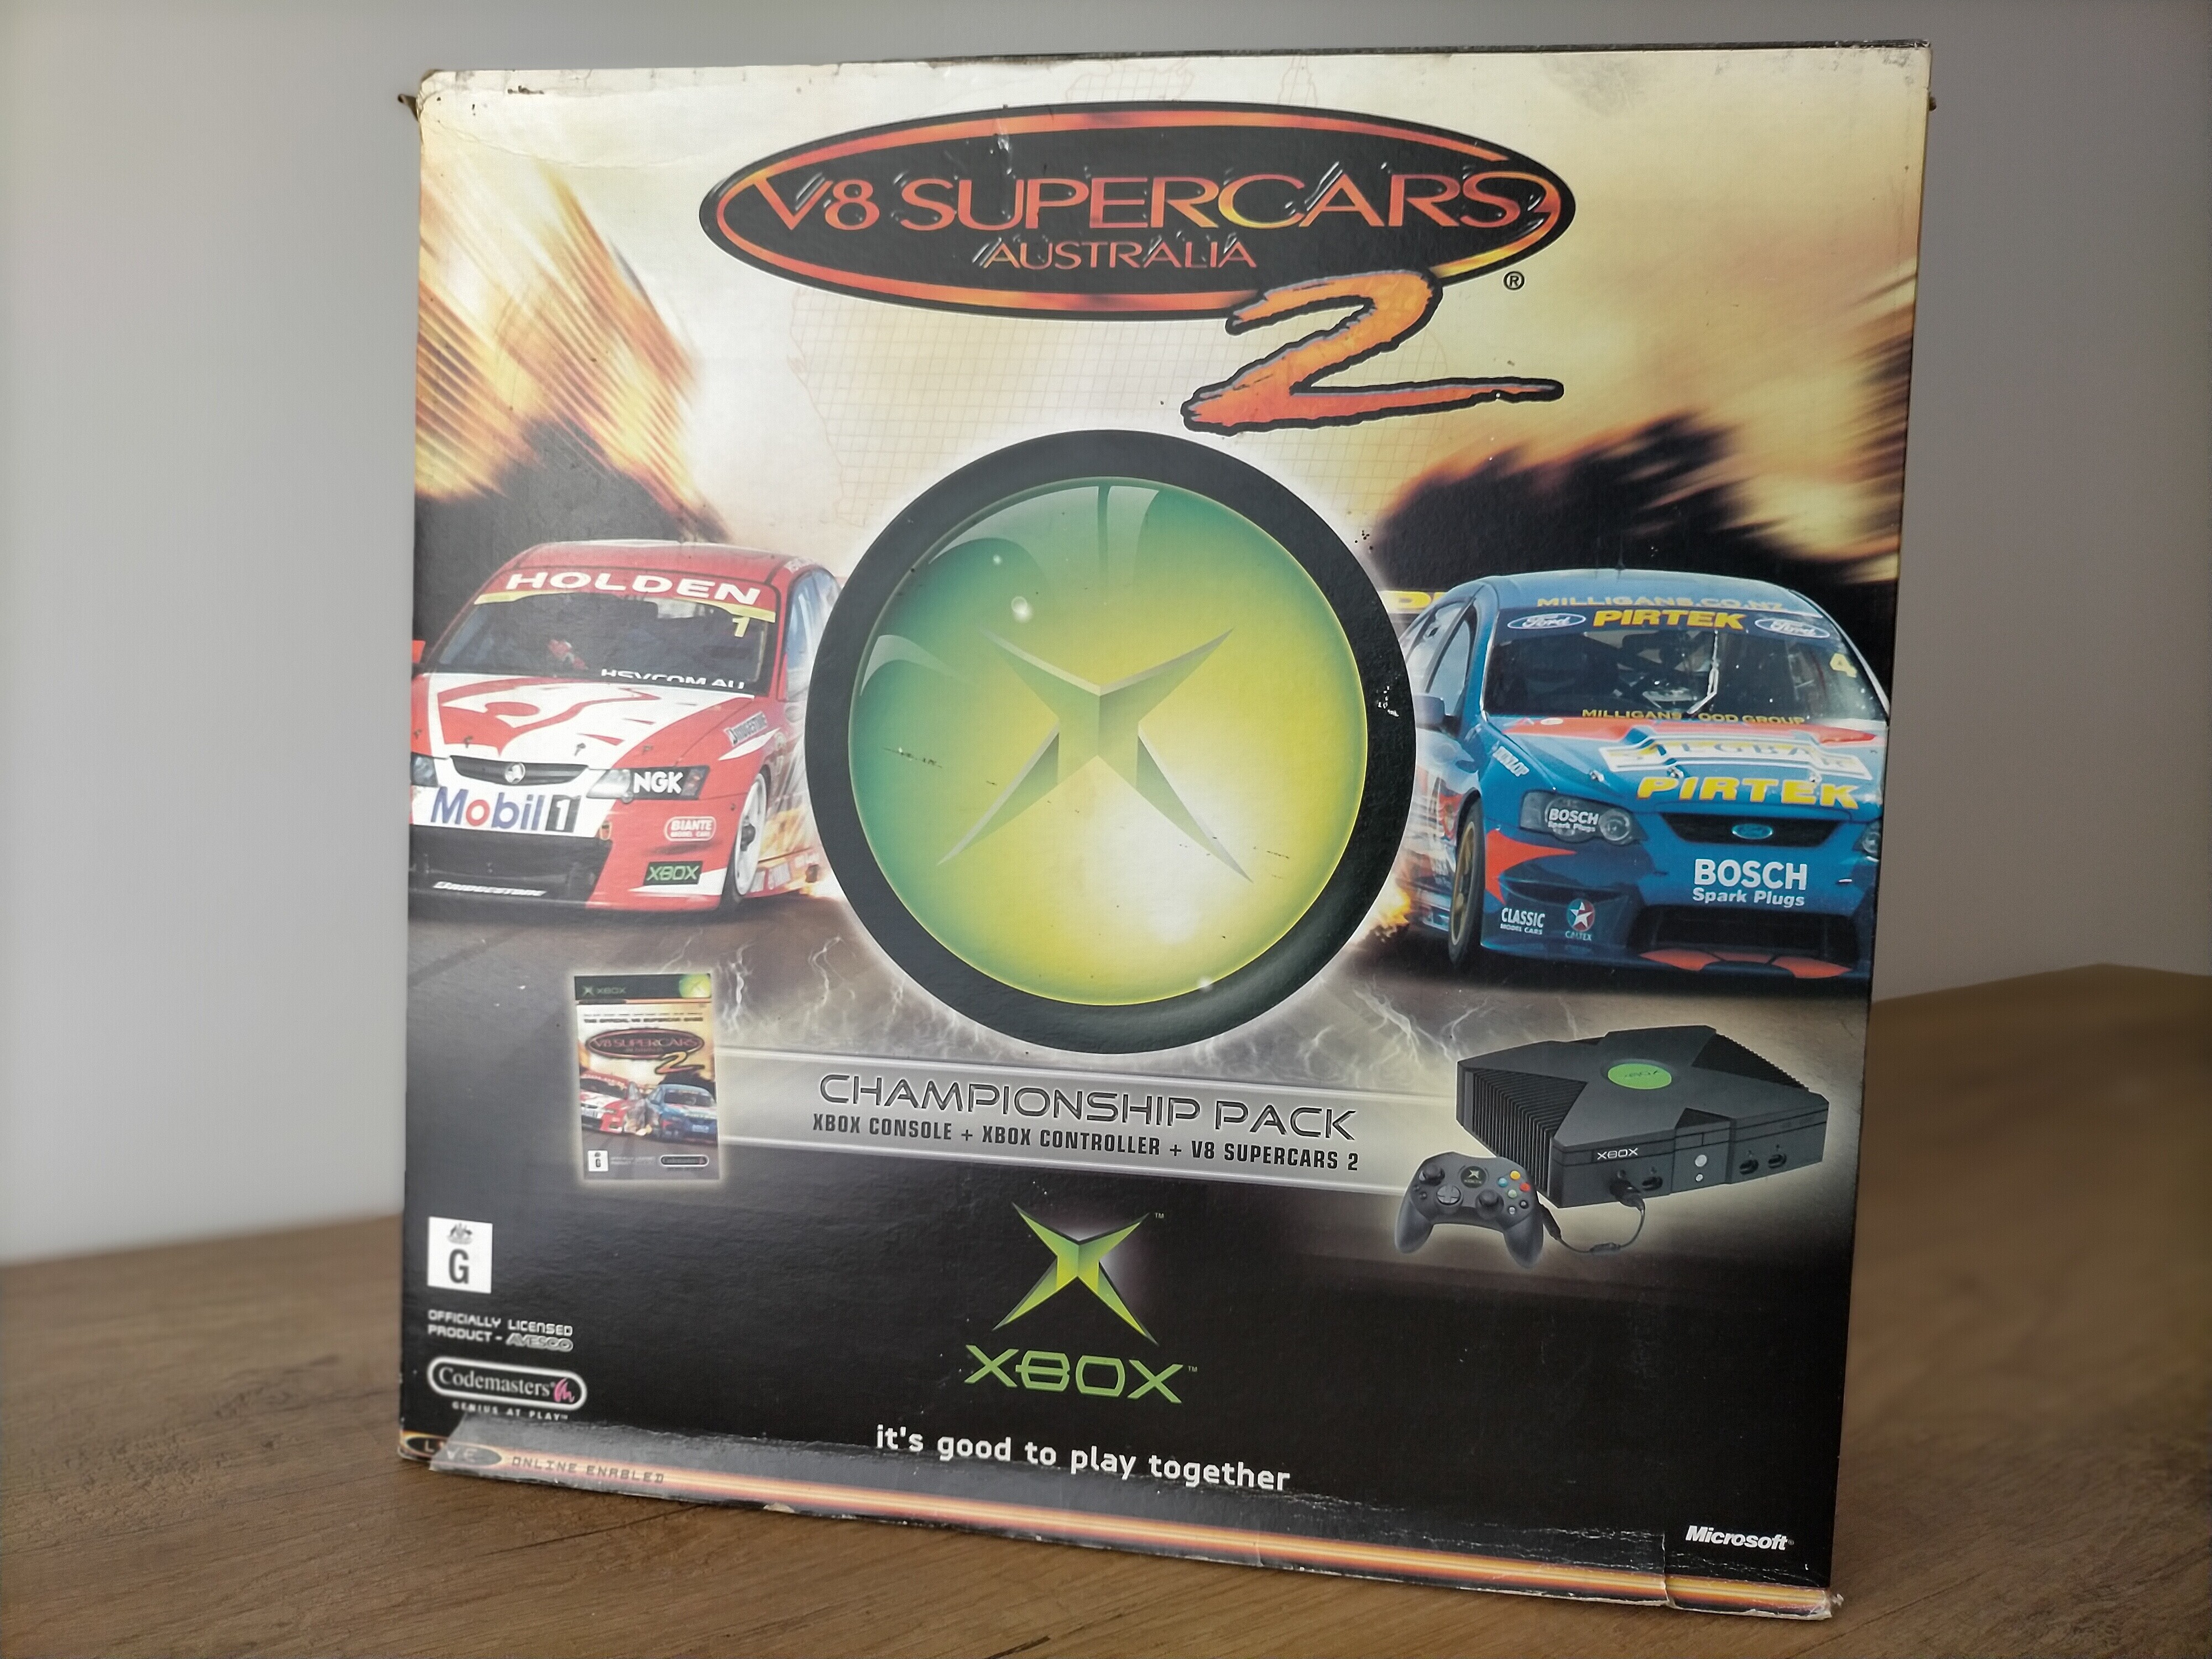  Microsoft Xbox Championship Pack